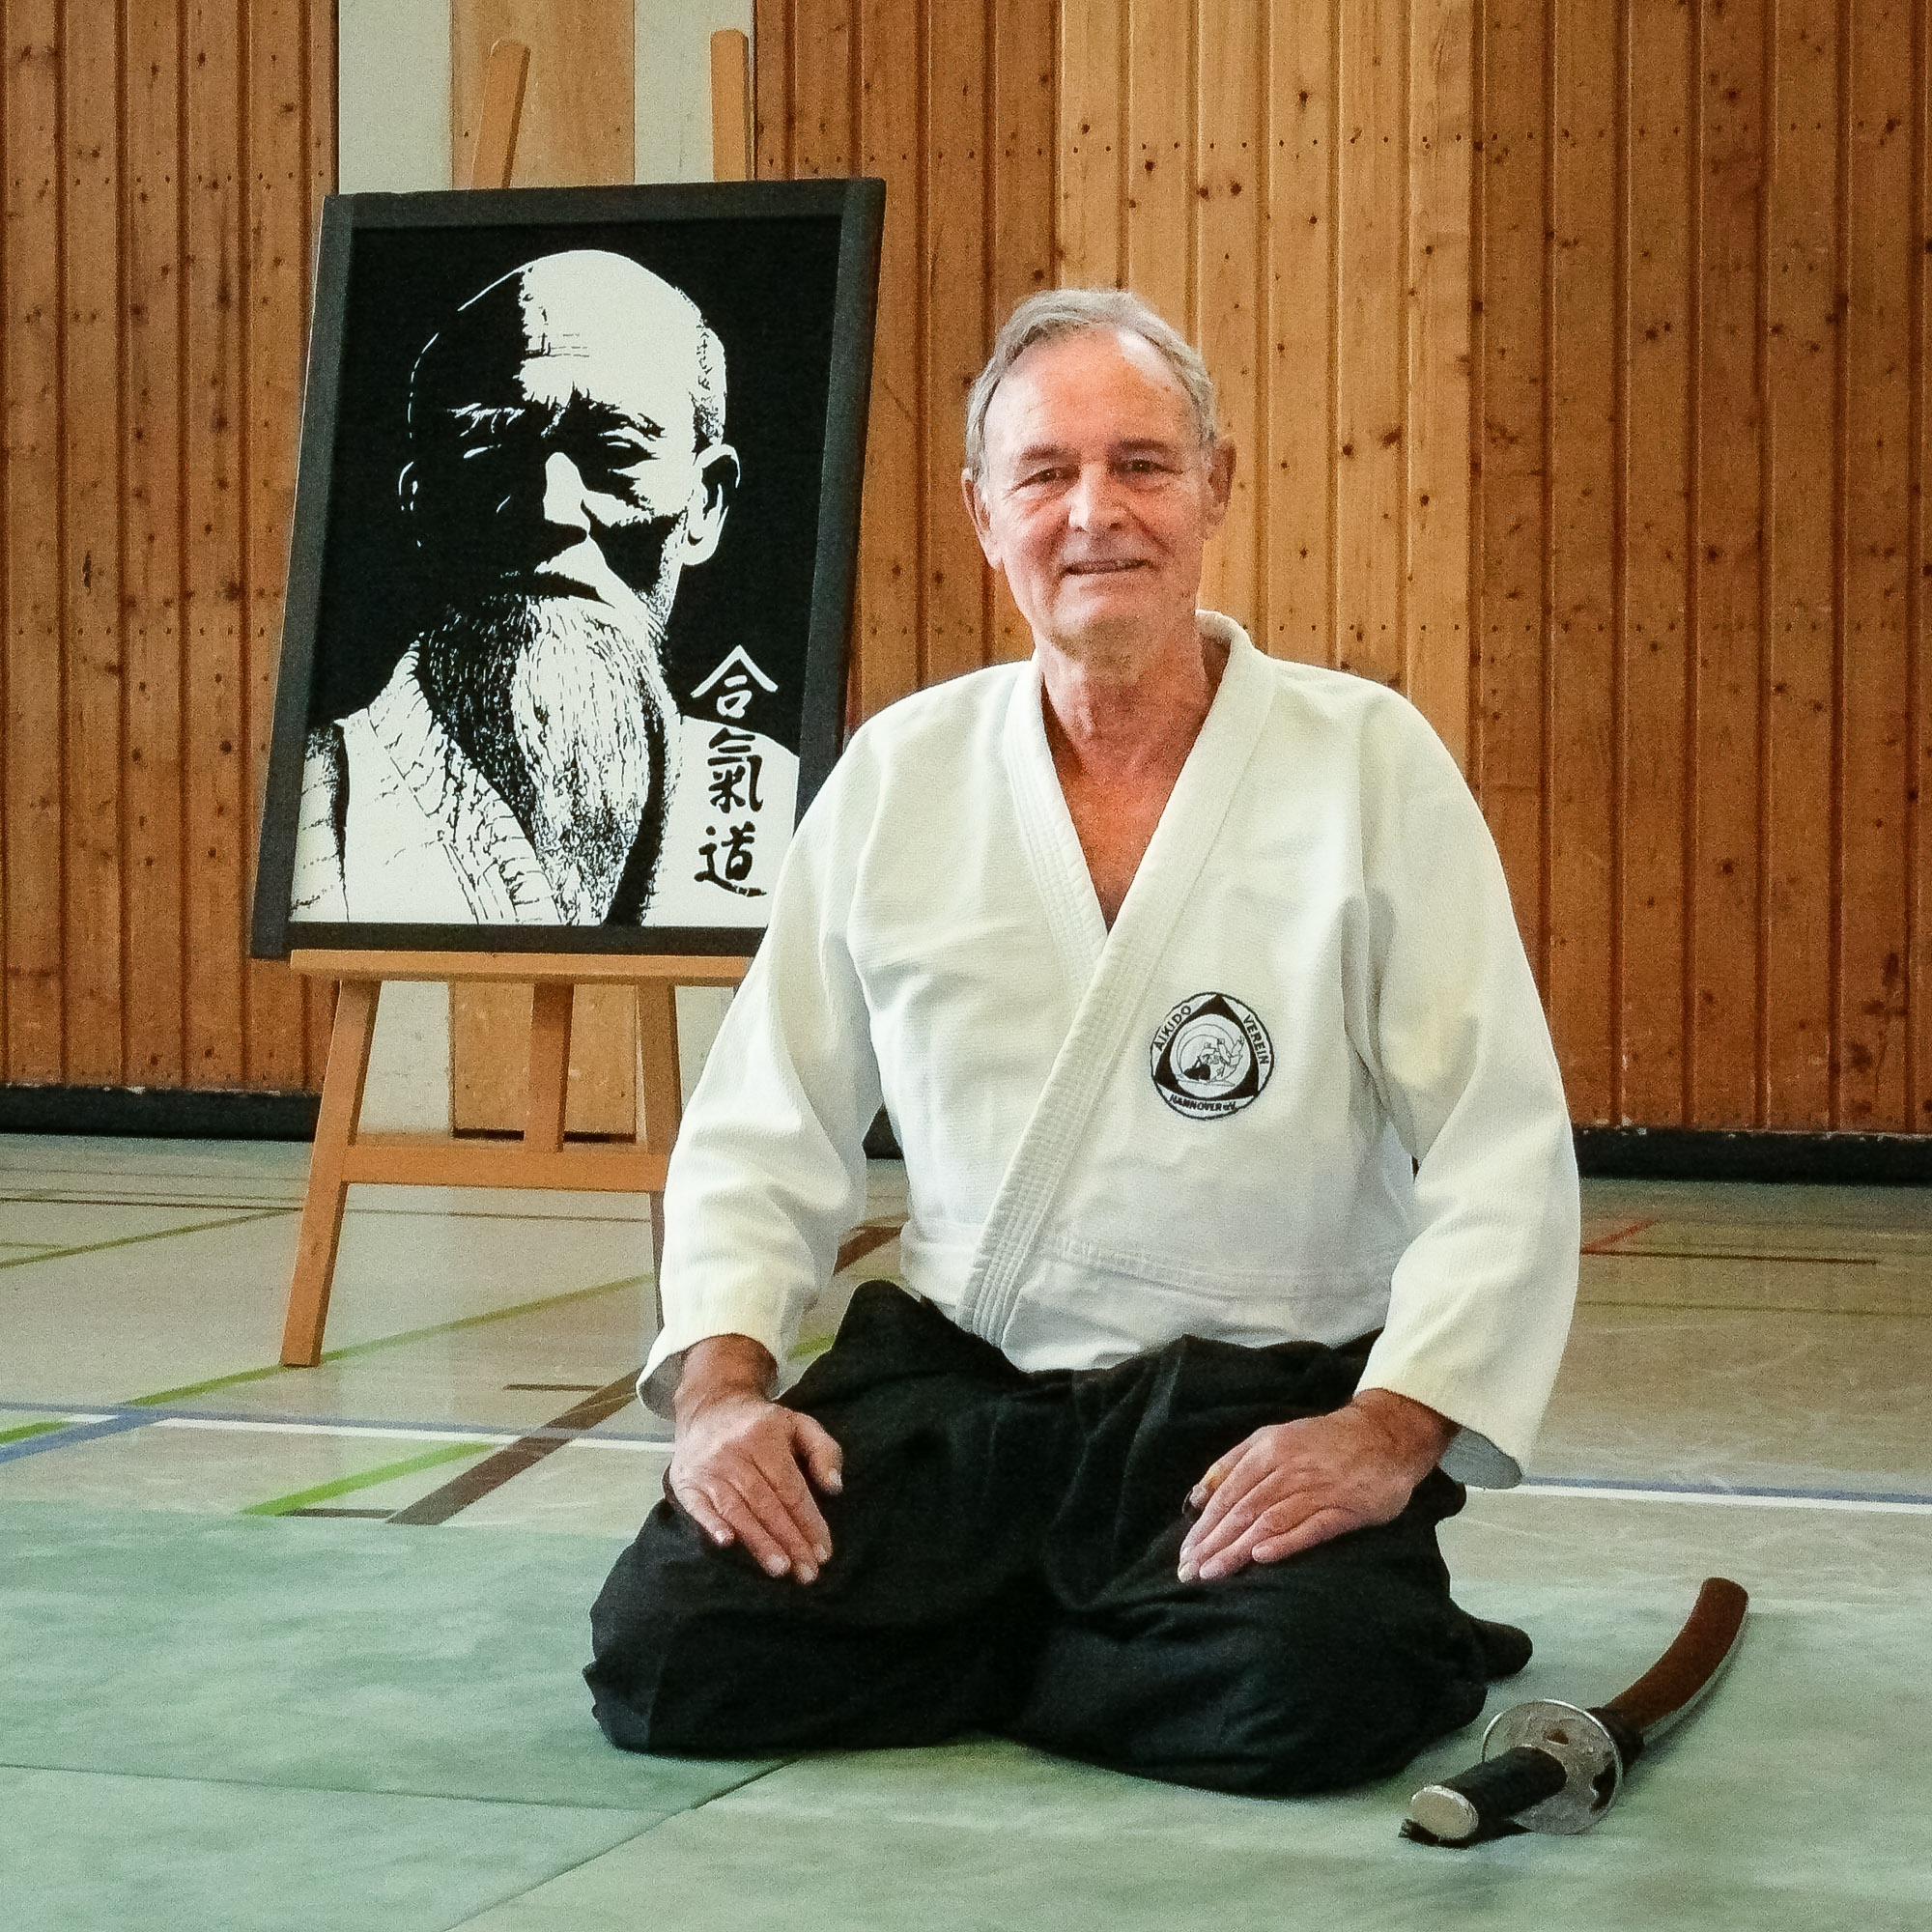 Klaus Liermann, 3. Dan Aikido